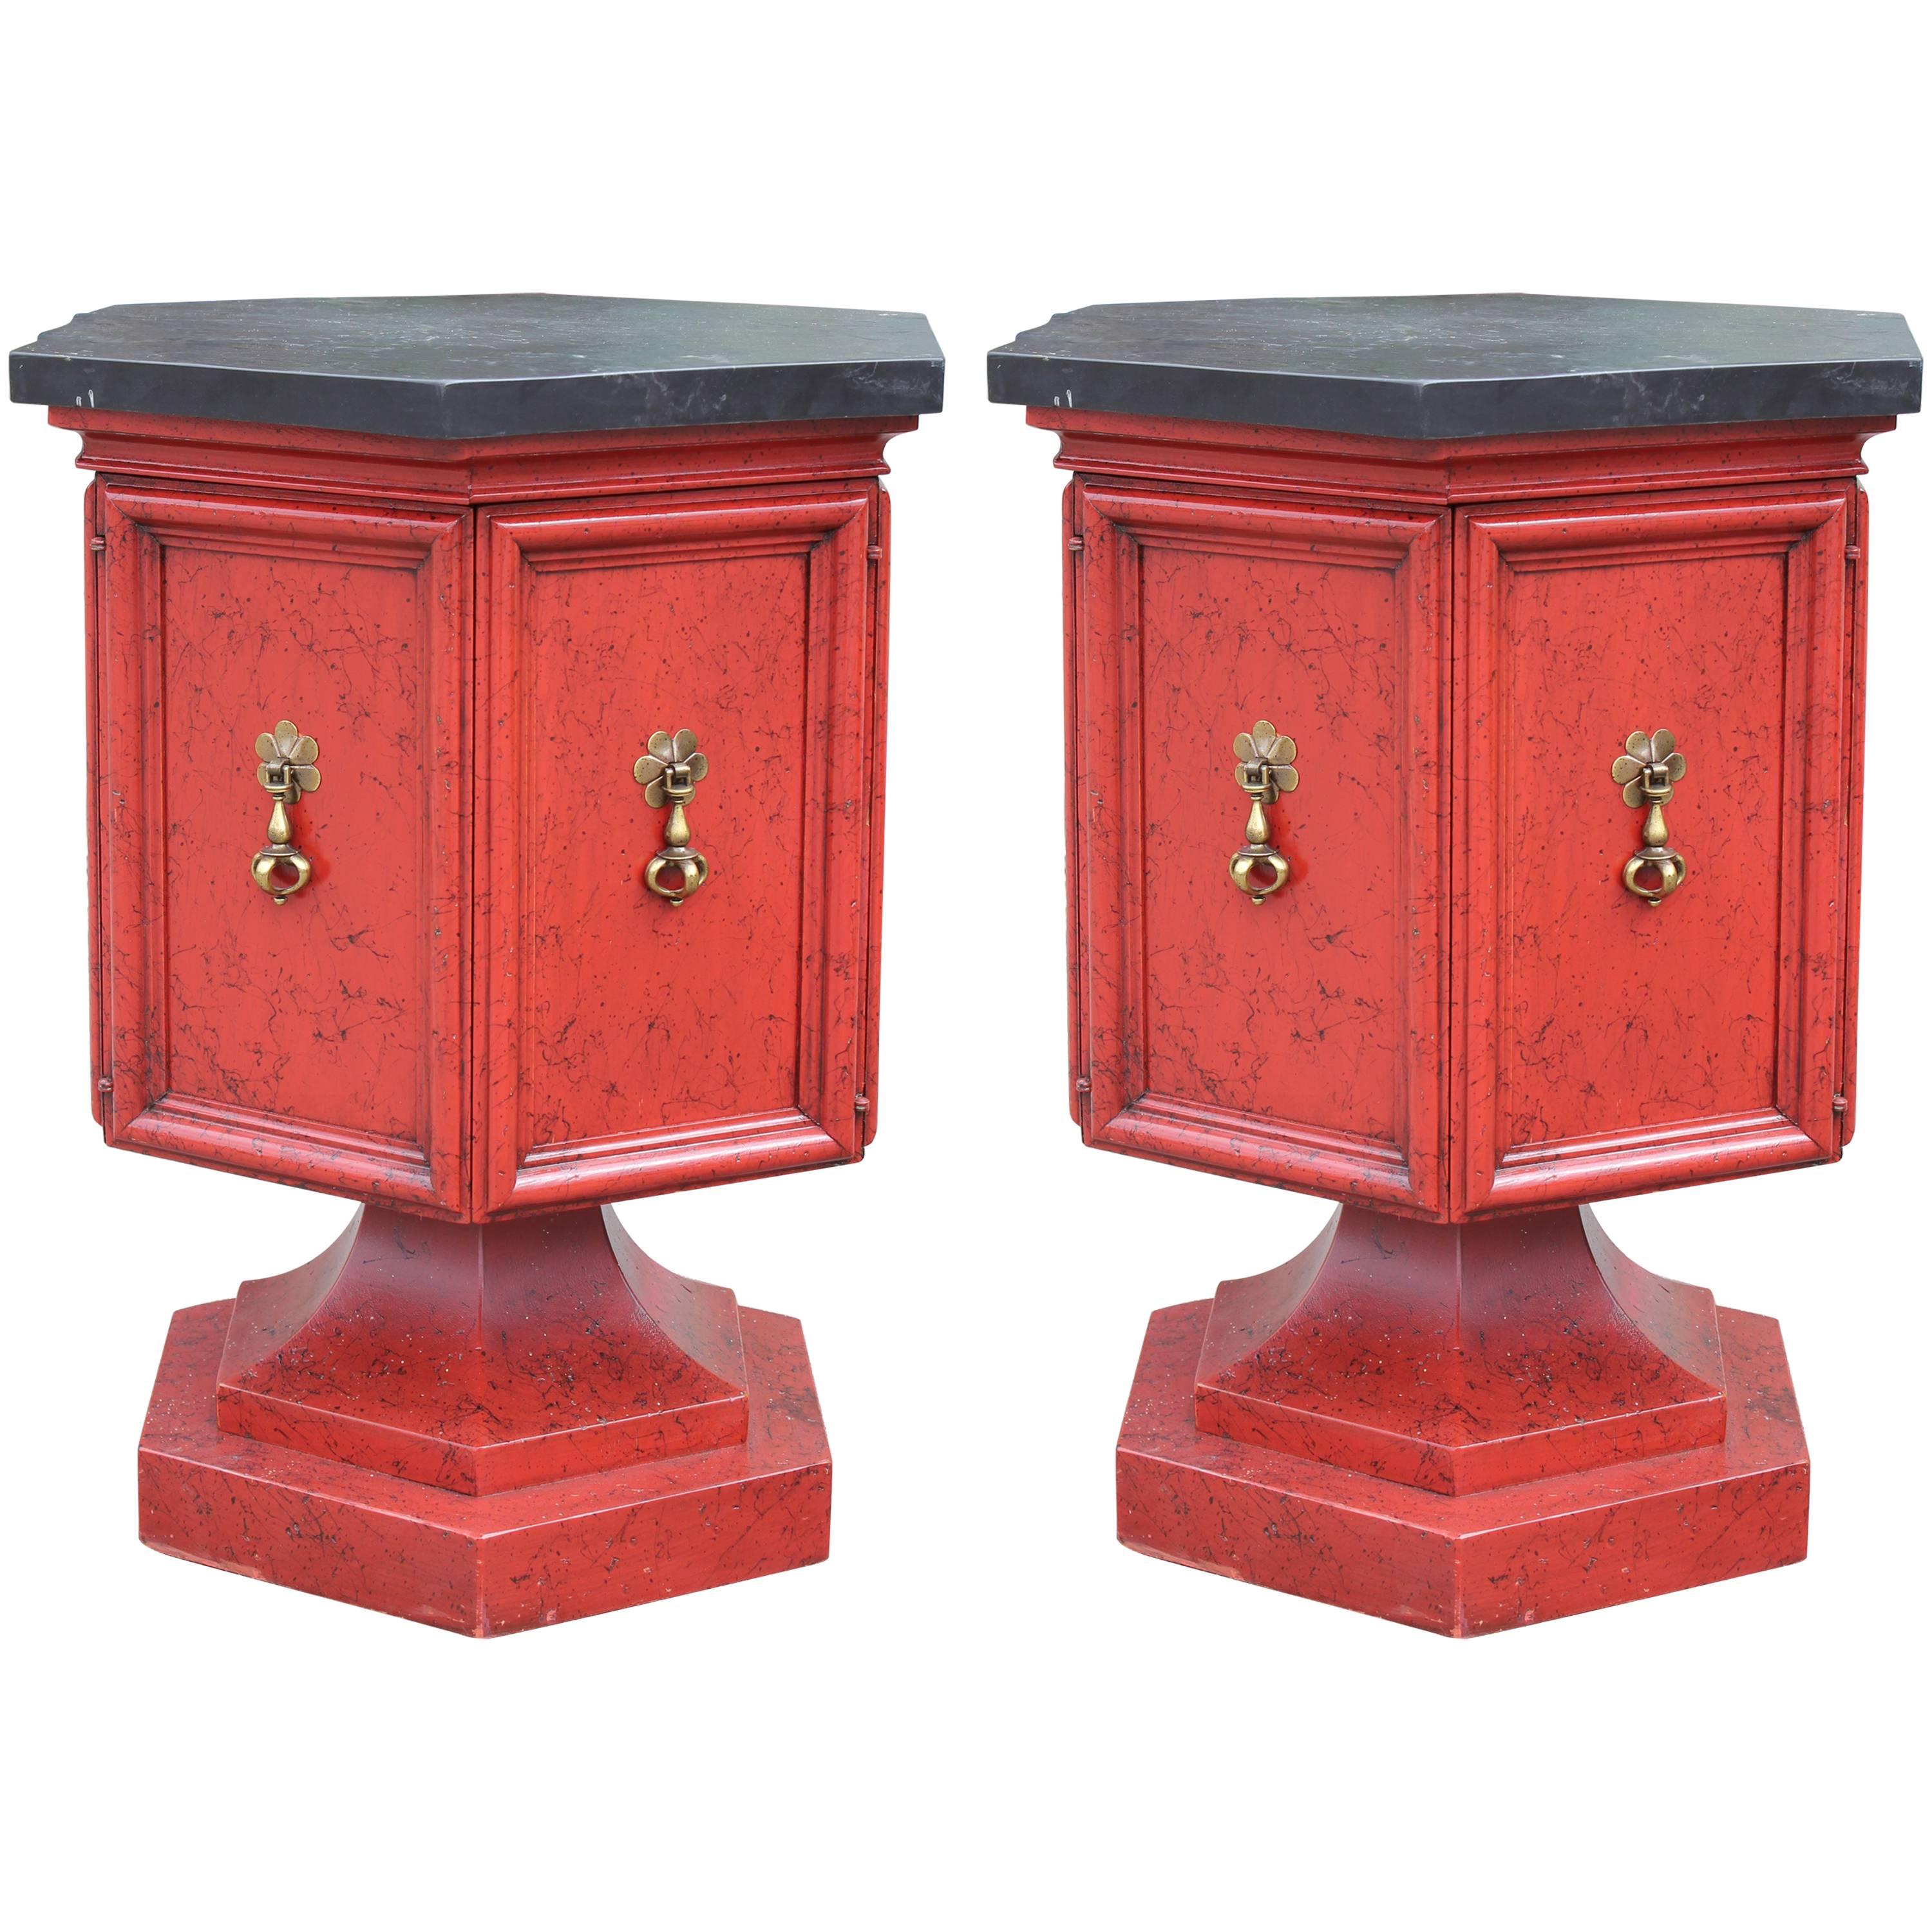 Pair of Hollywood Regency Slate Top Red and Black Pedestal Side or End Tables